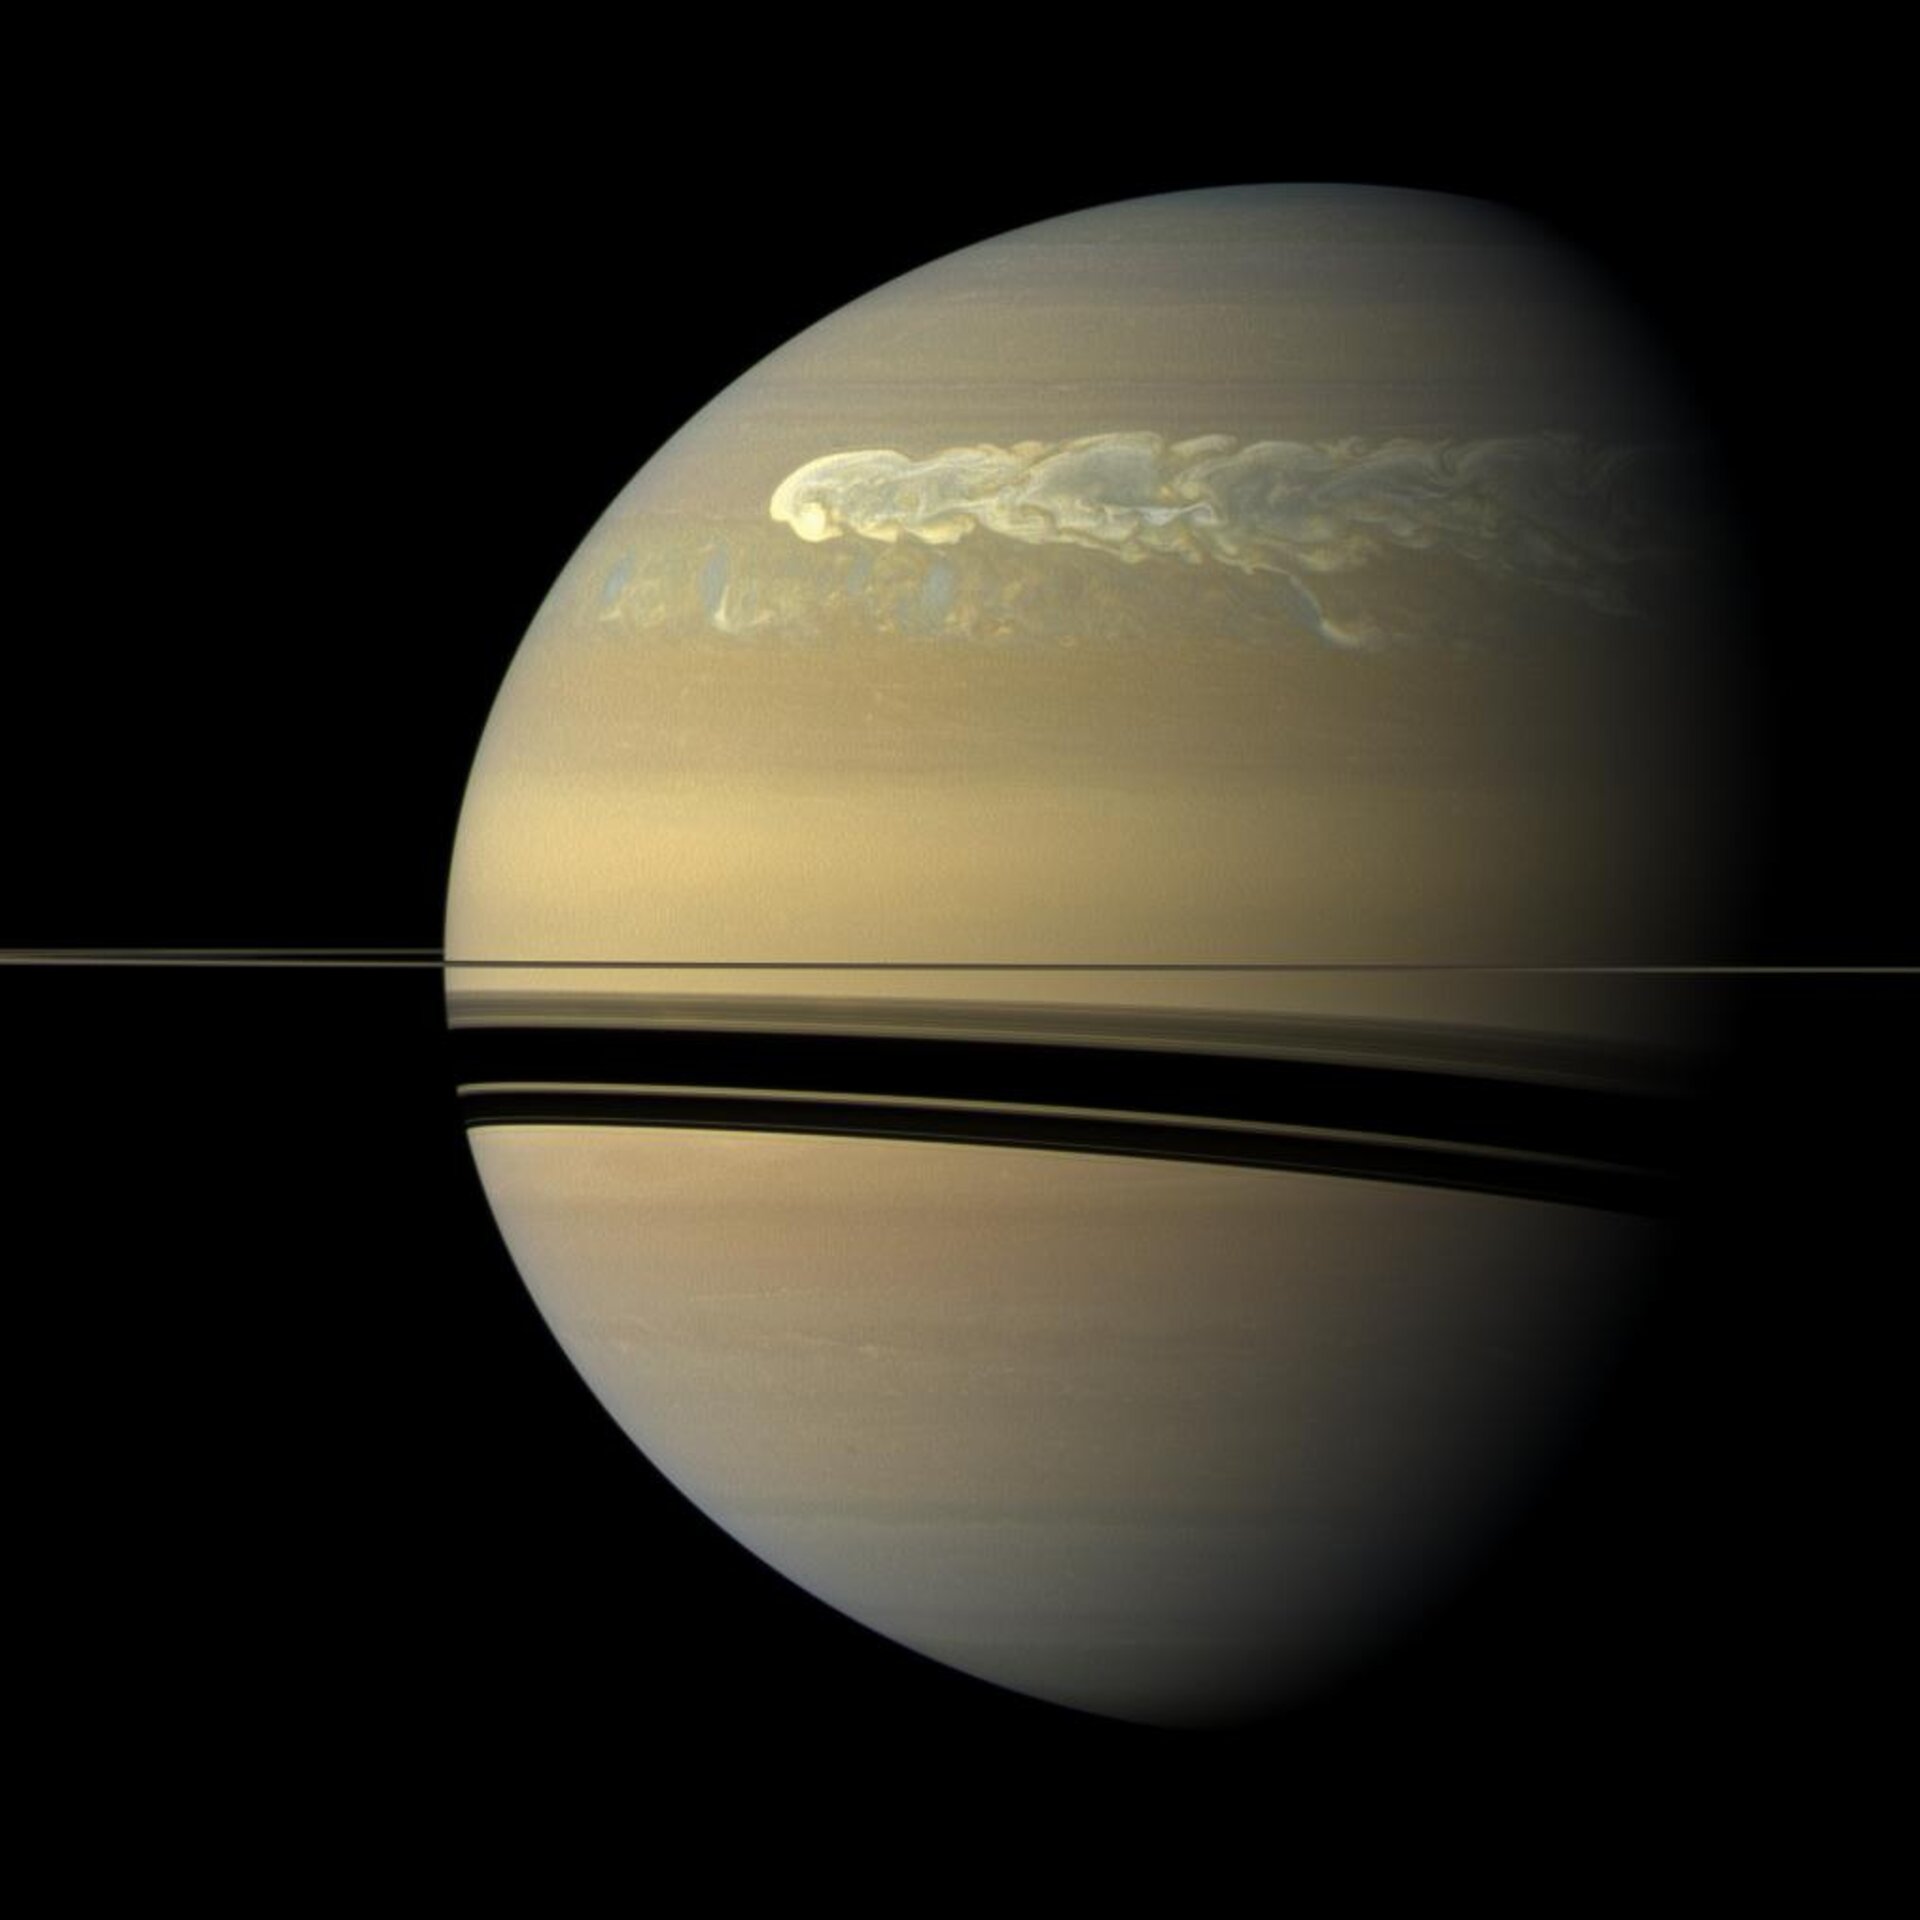 Saturn's greatest storm 